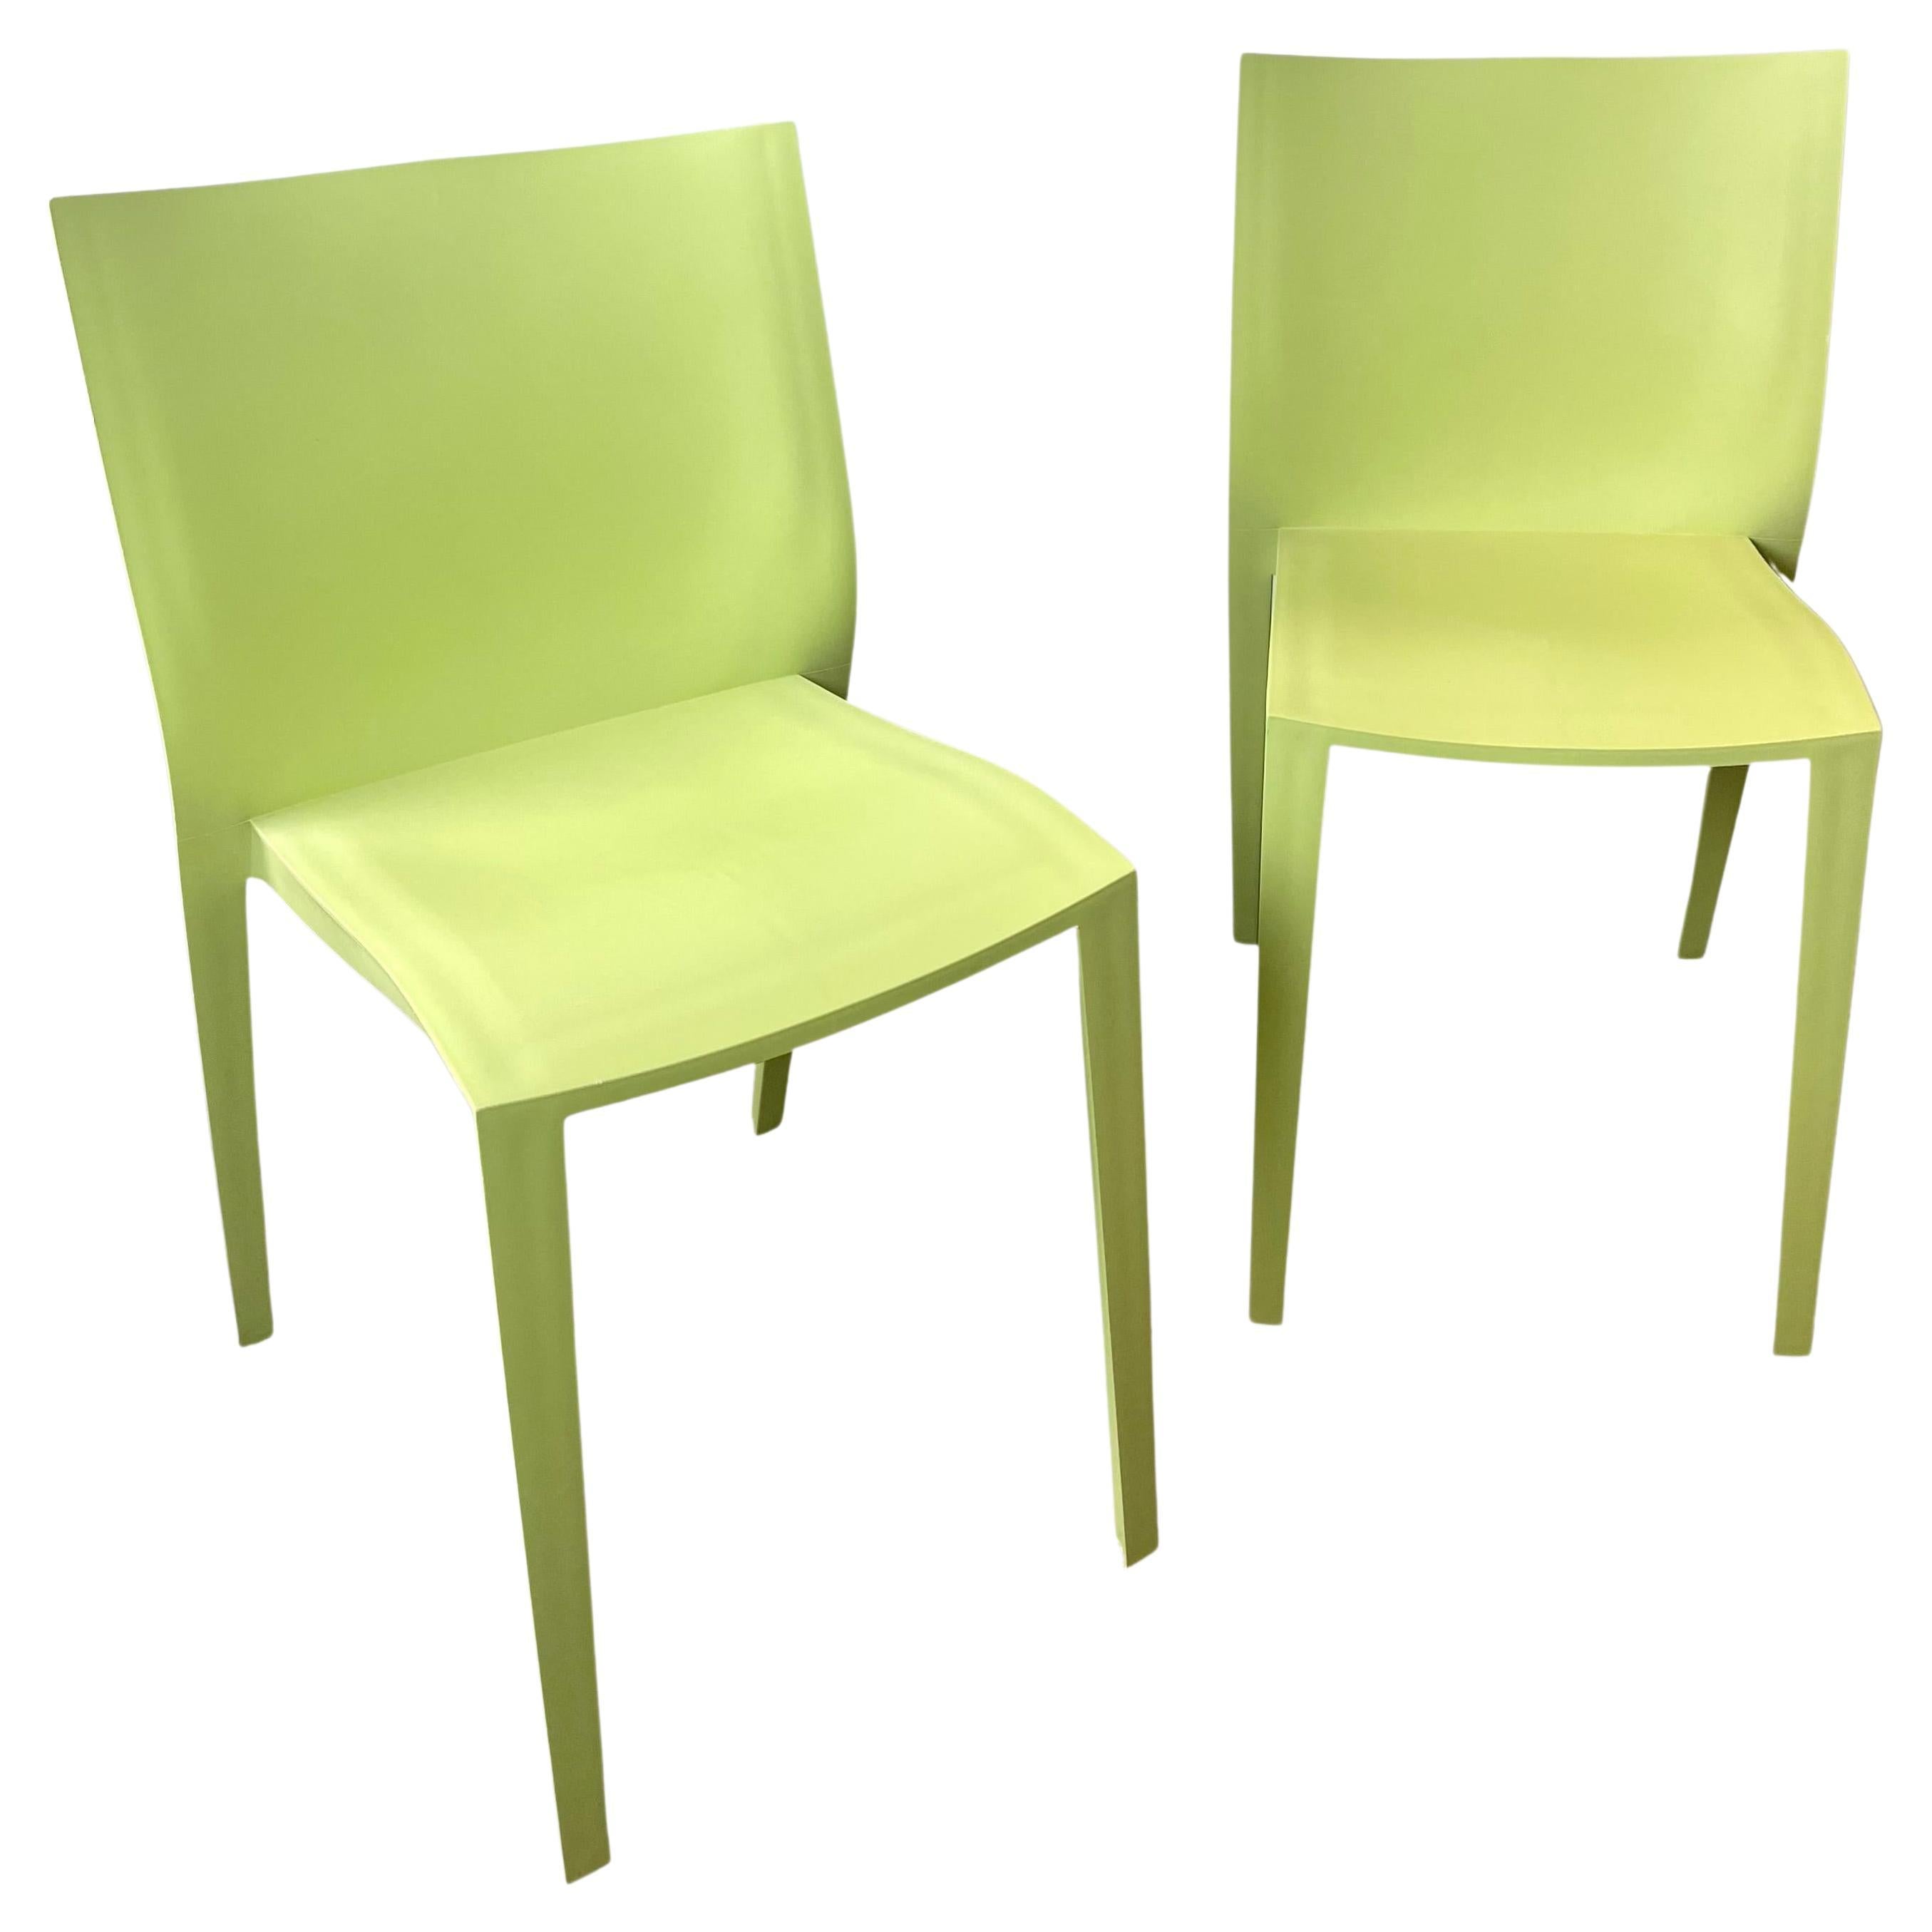 Philippe Starck, ensemble de 2 chaises vertes françaises, design Slick XO - France